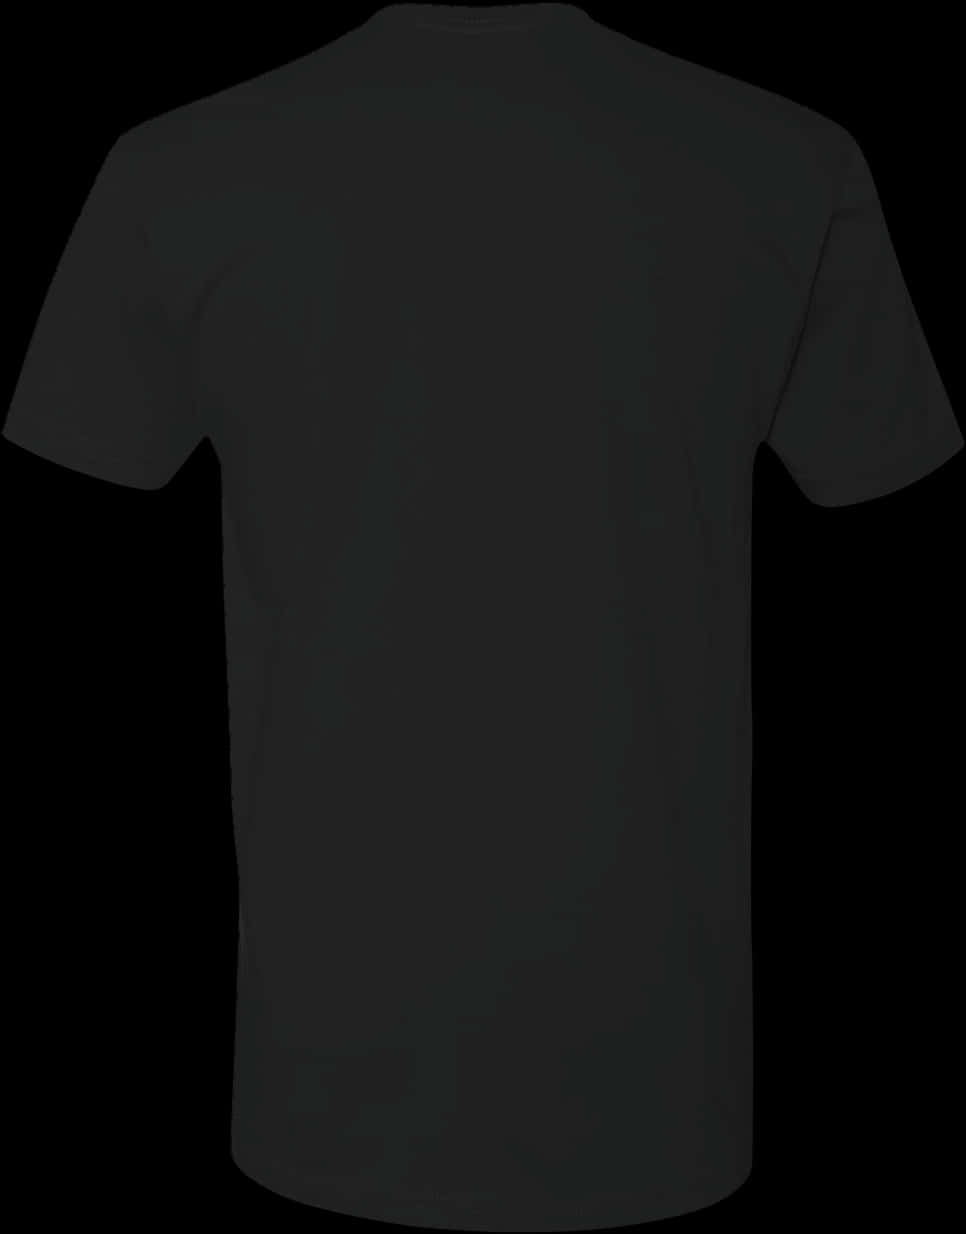 Plain Black T Shirt Back View PNG